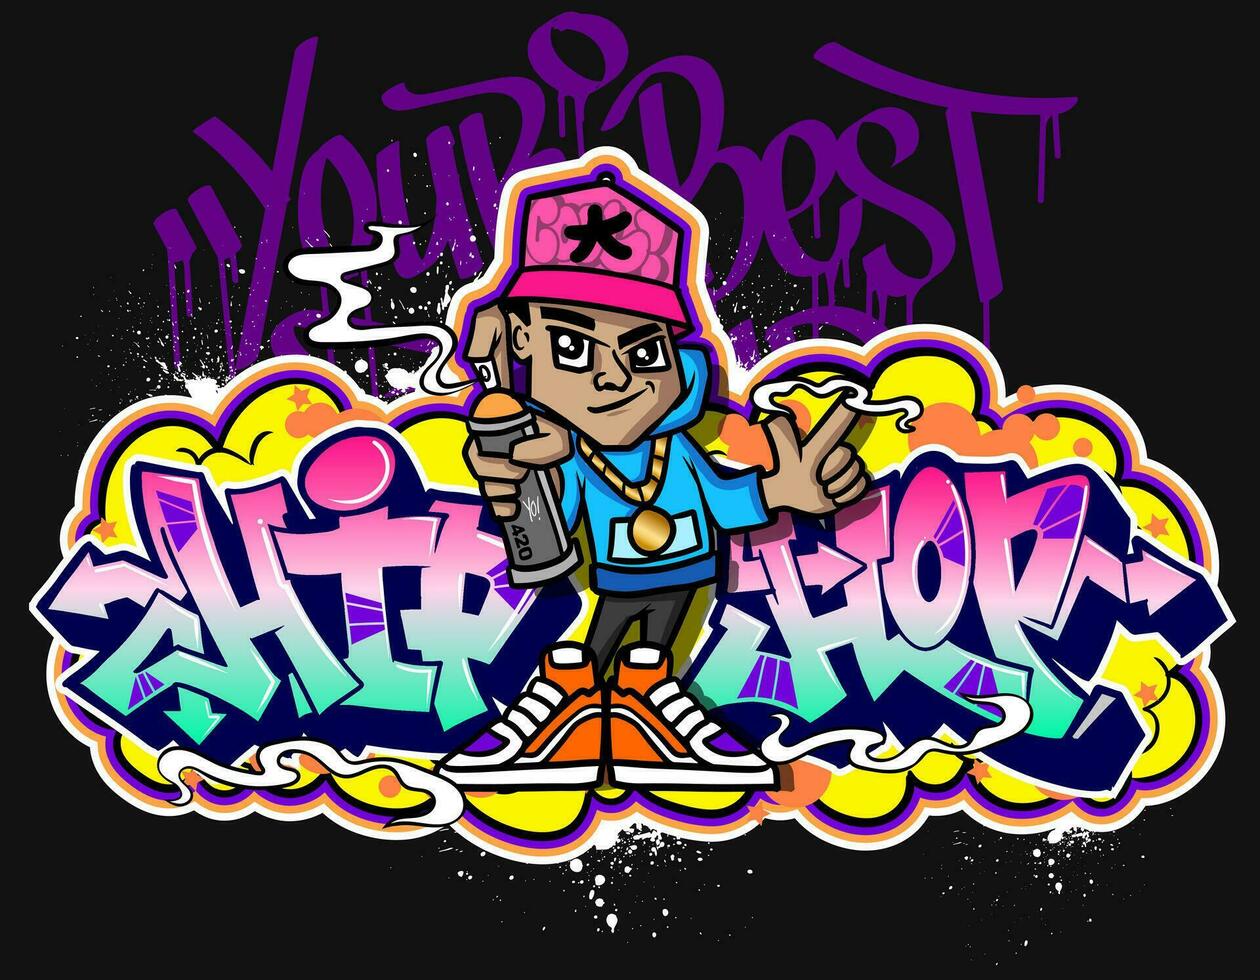 Graffiti cartoon illustrations in vibrant colors. Street art hip-hop graffiti character design in vector illustrations.